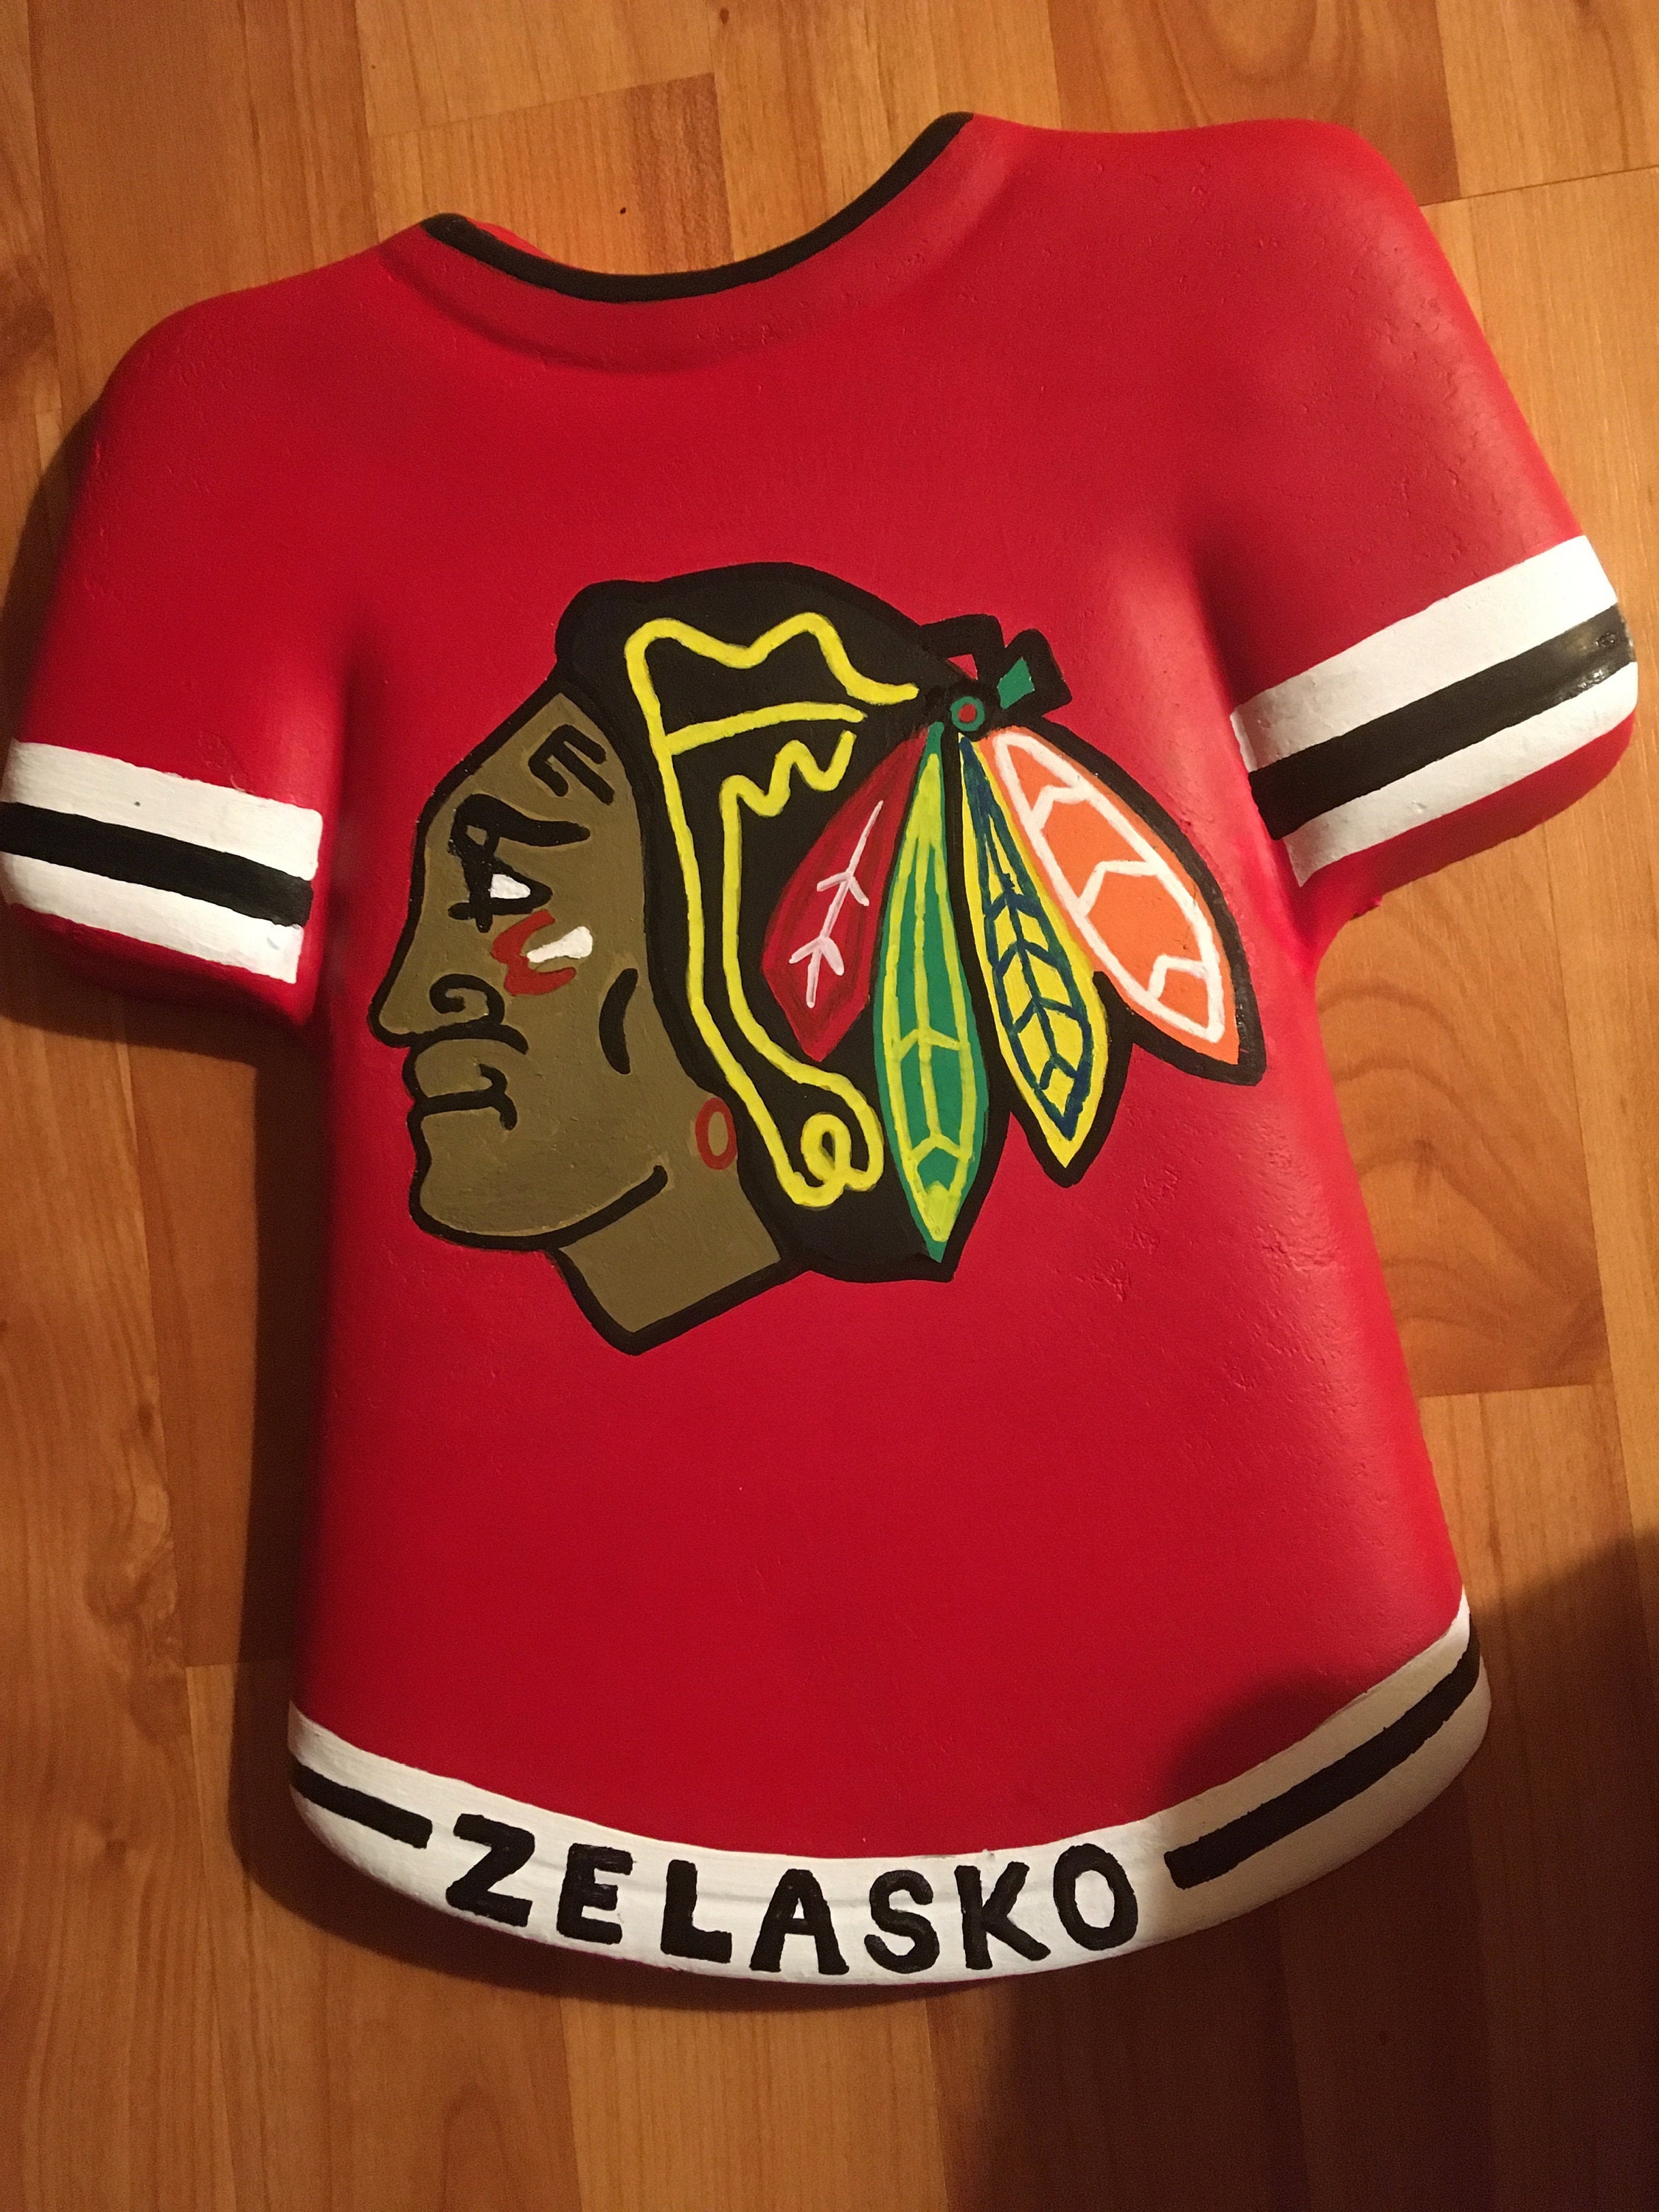 adidas Chicago Blackhawks Sweatshirt NHL Fan Apparel & Souvenirs